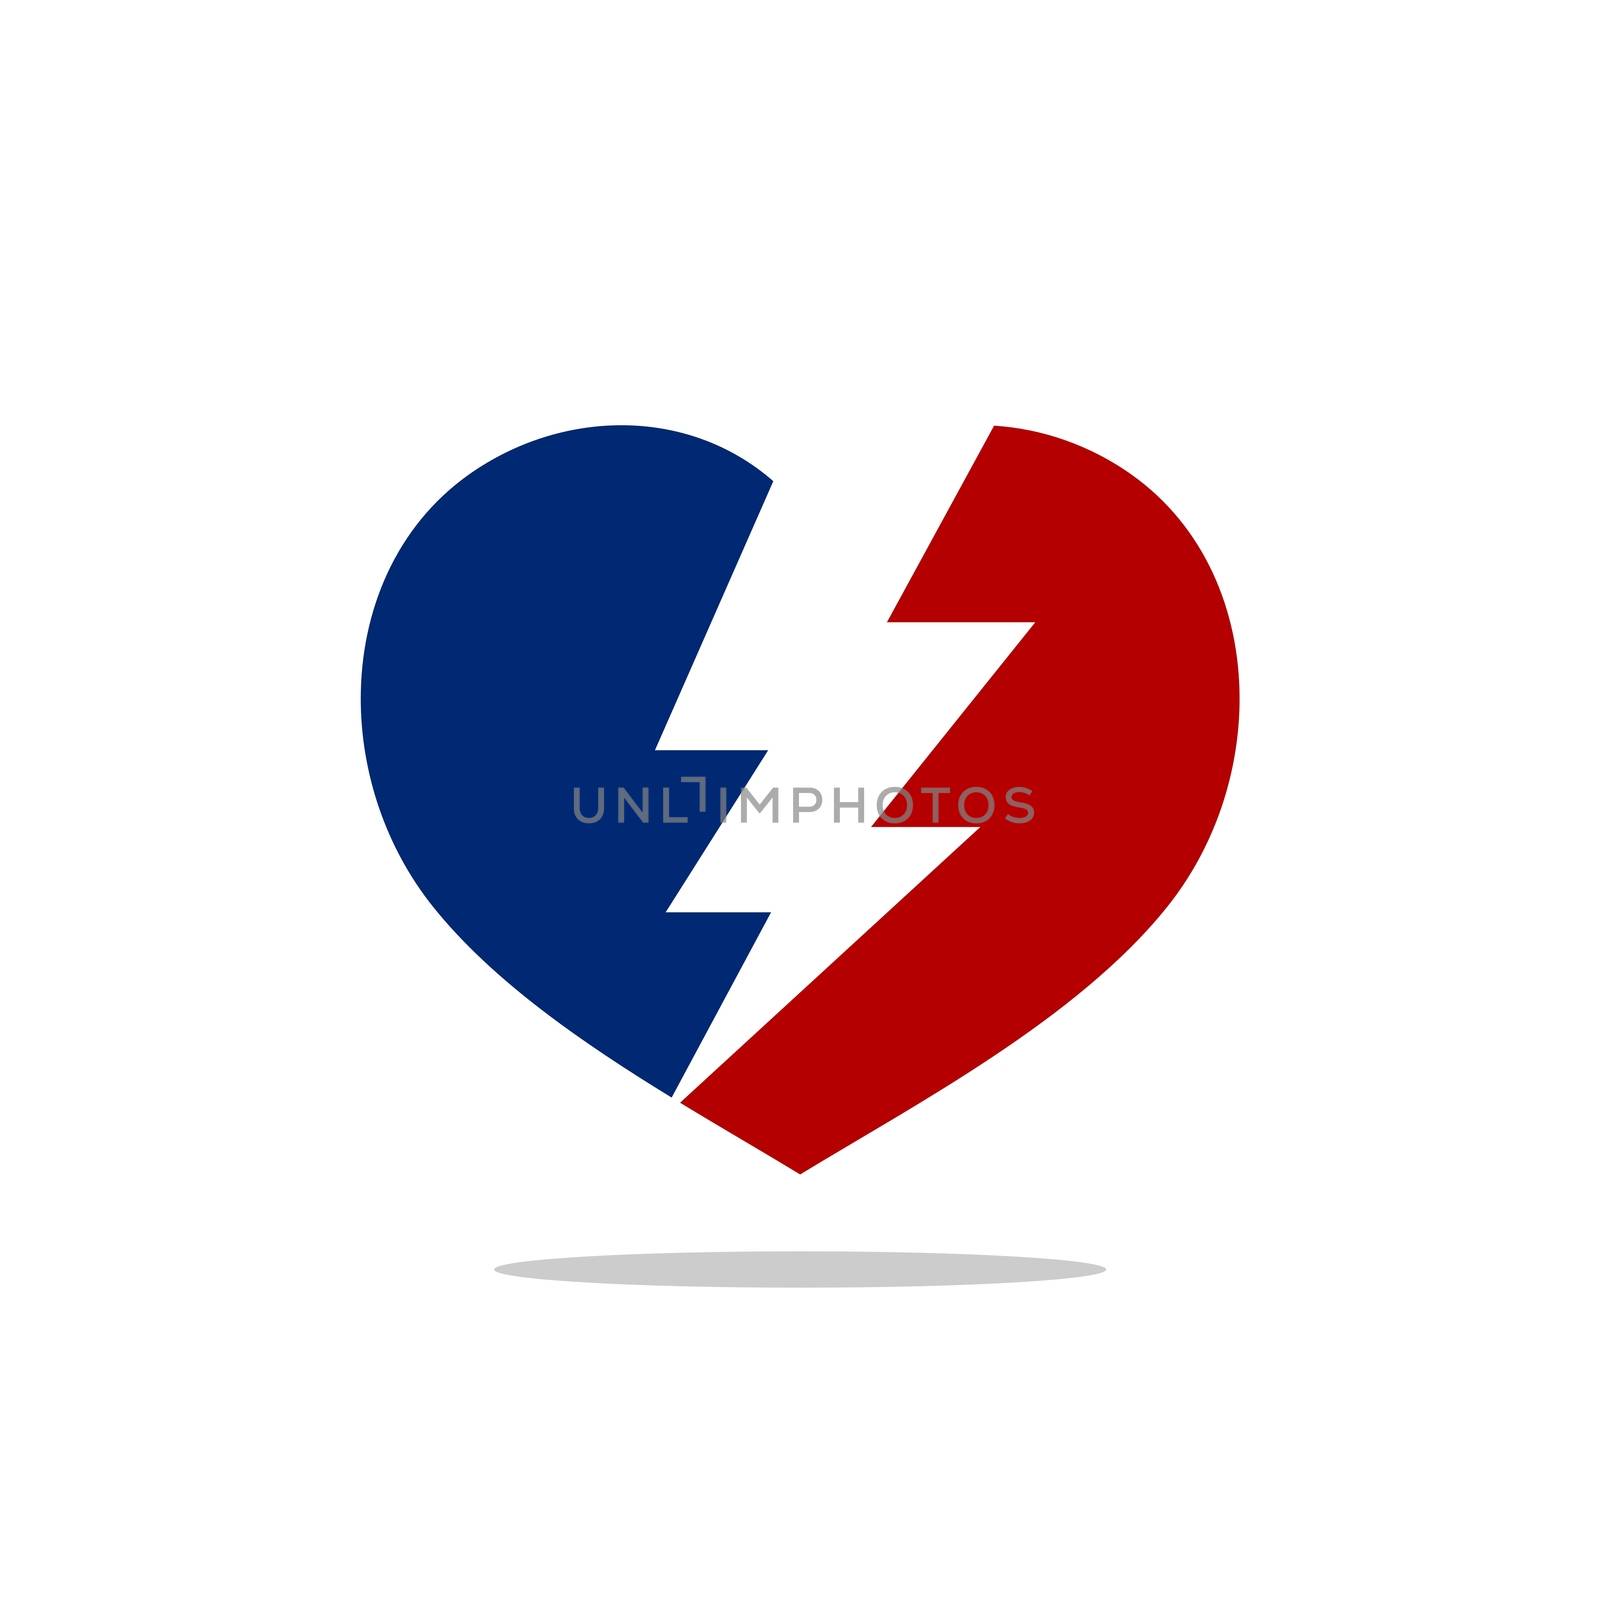 Broken Heart Thunderbolt Logo Template Illustration Design. Vector EPS 10.